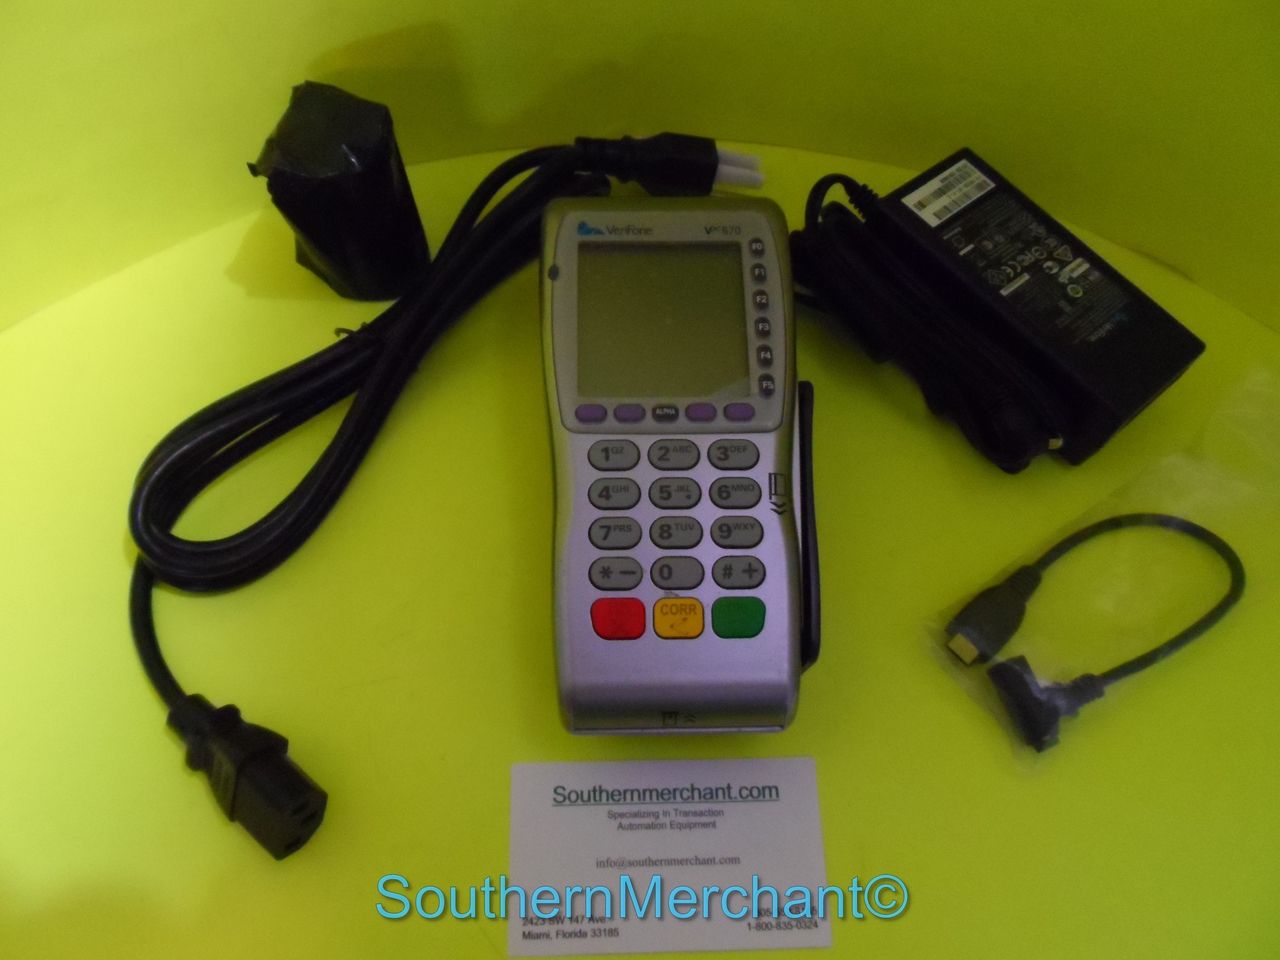 Verifone Vx670 GPRS Chip Card Reader 12mb Unlocked for sale online